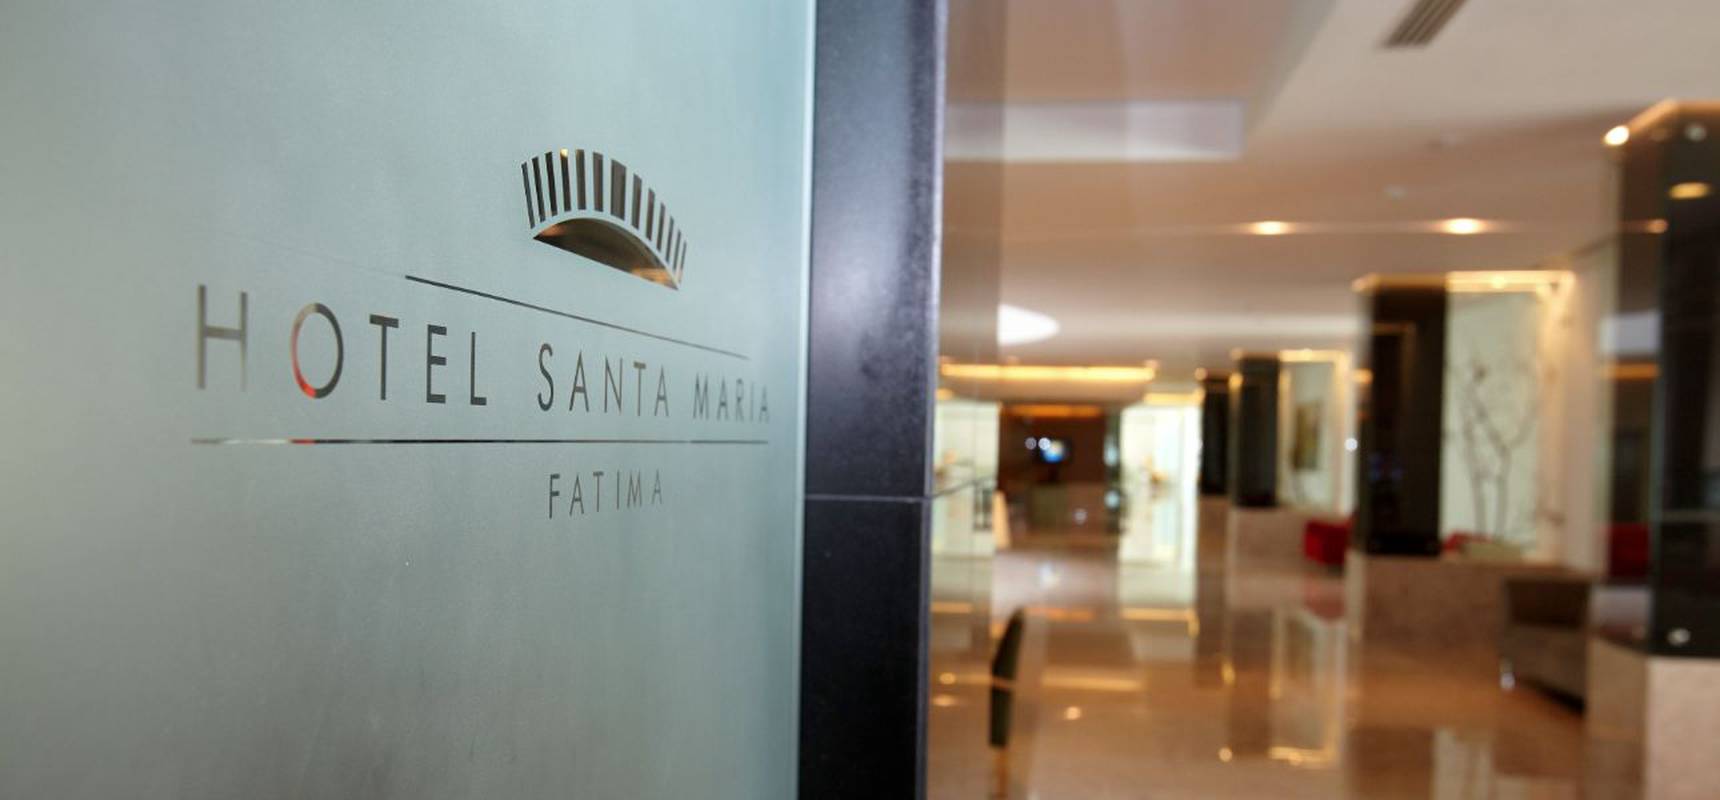   Hotel Santa Maria Fatima